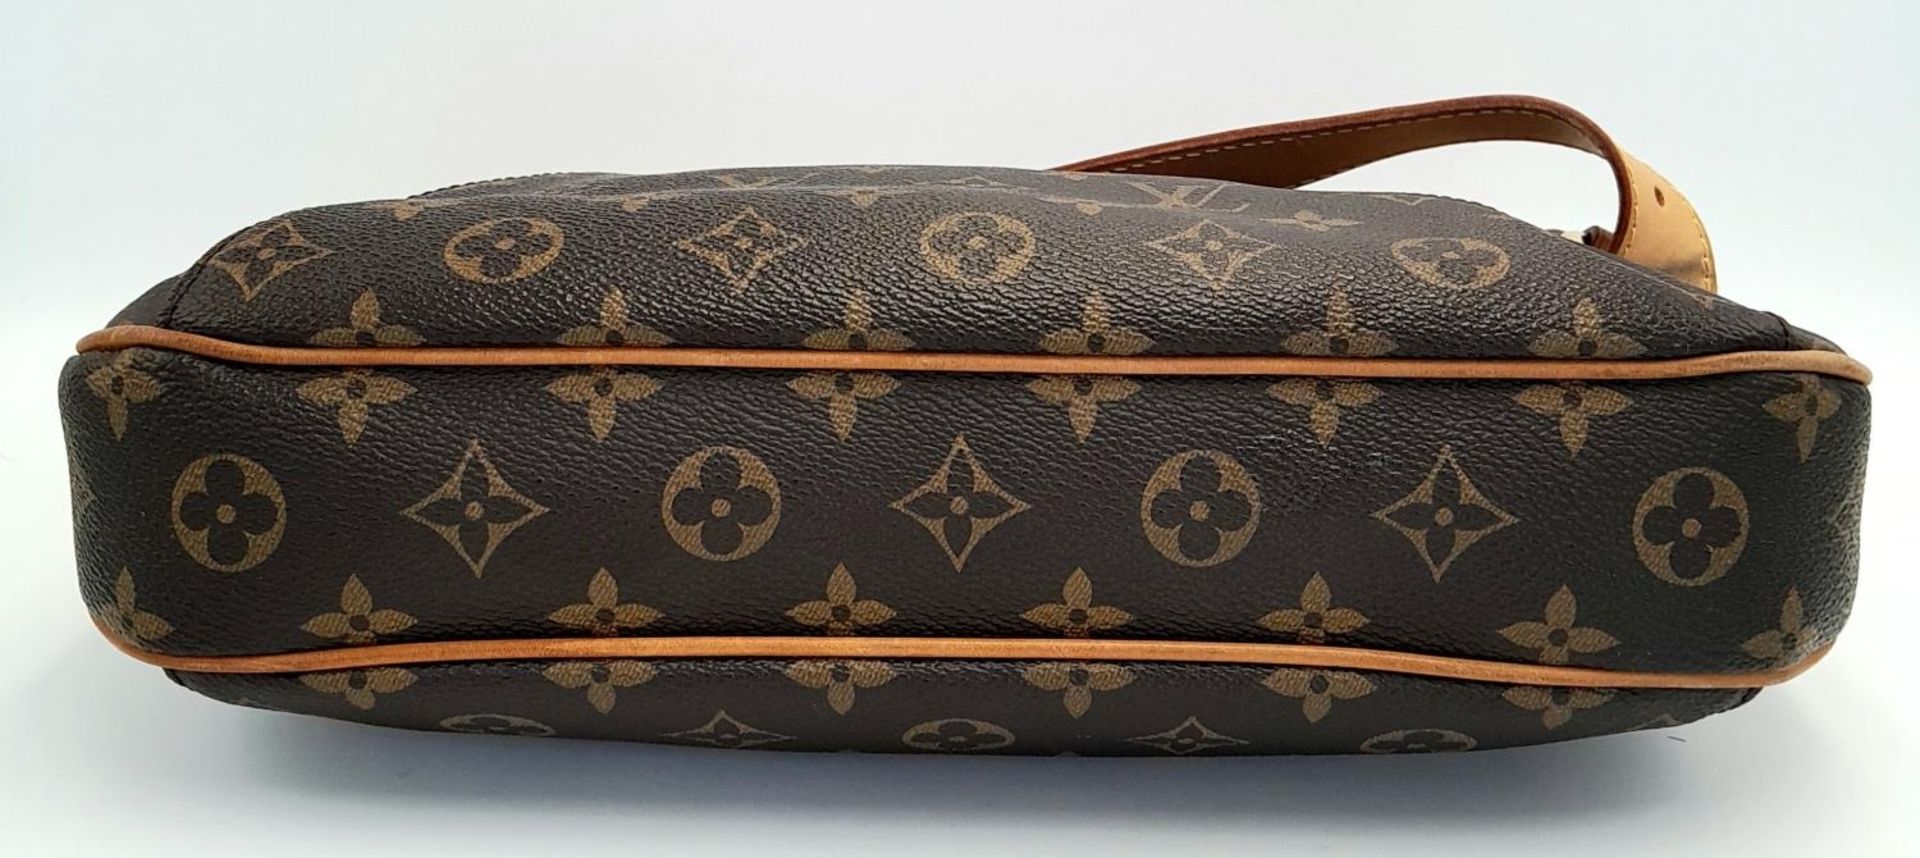 A Louis Vuitton Thames Shoulder Bag. Monogramed canvas exterior with gold-toned hardware, adjustable - Image 4 of 9